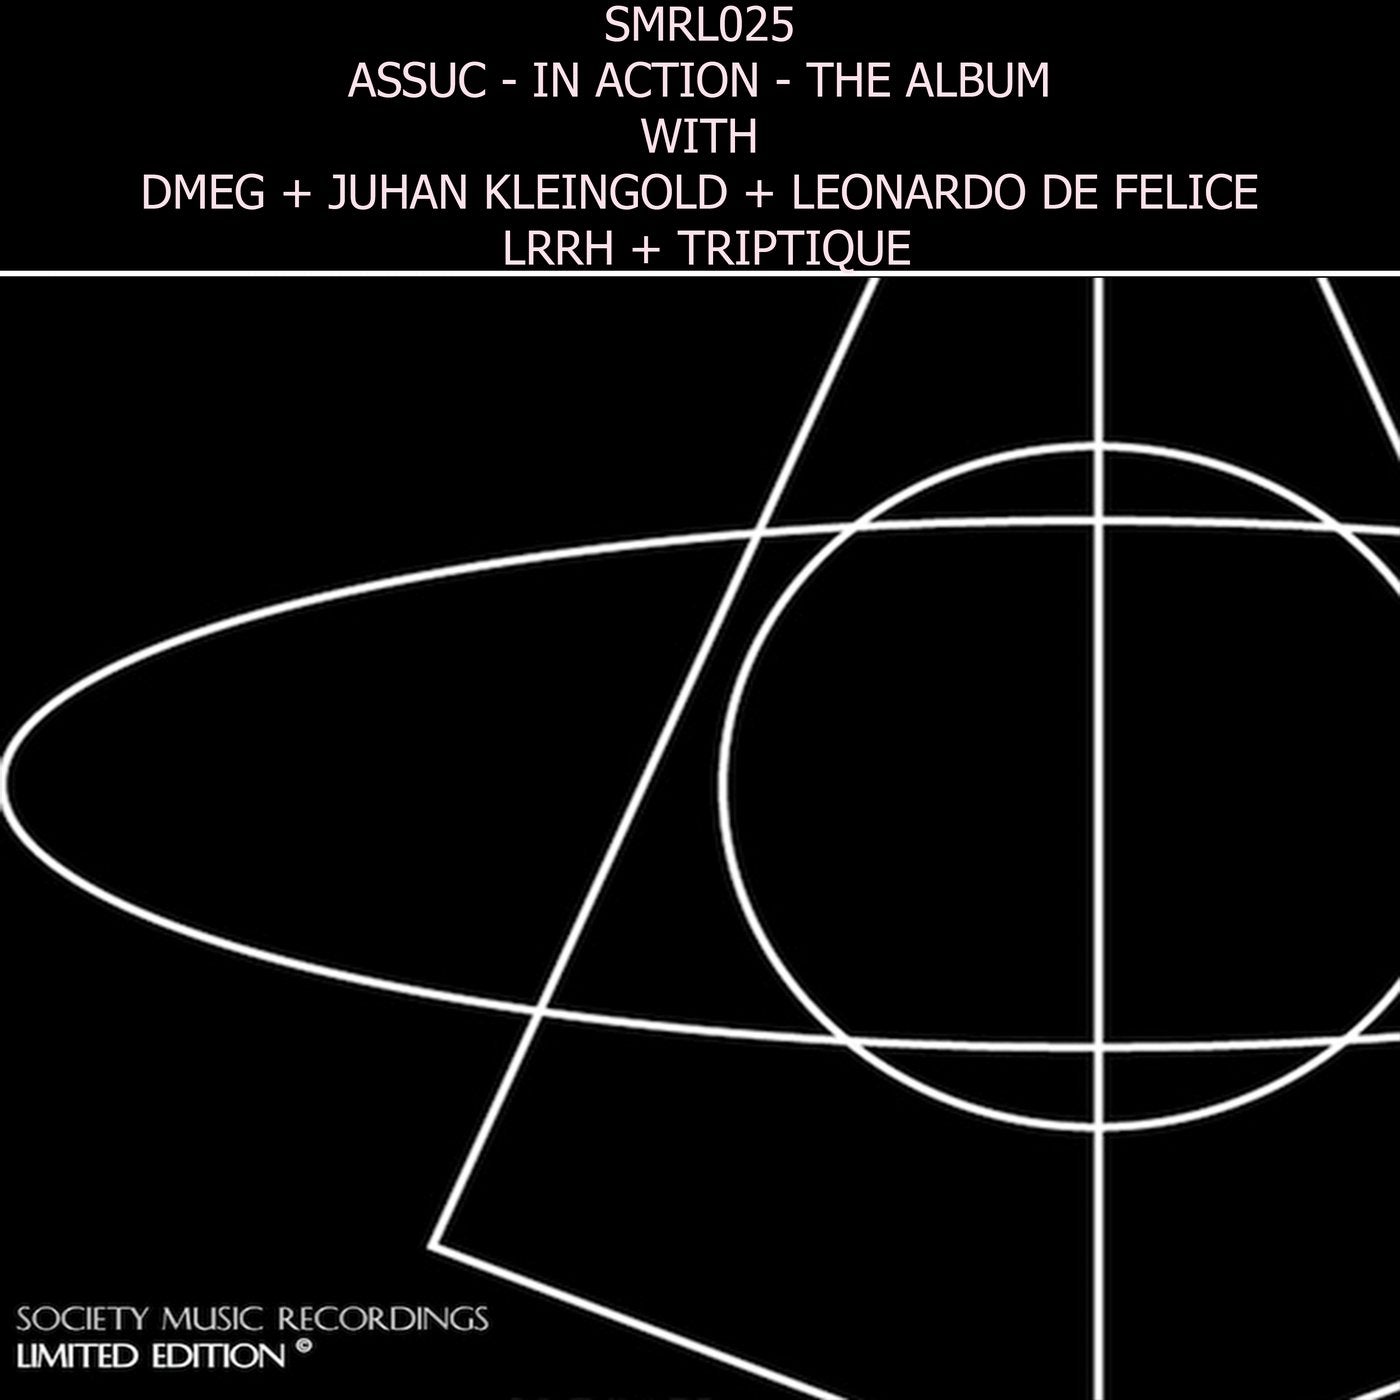 In Action - The Album